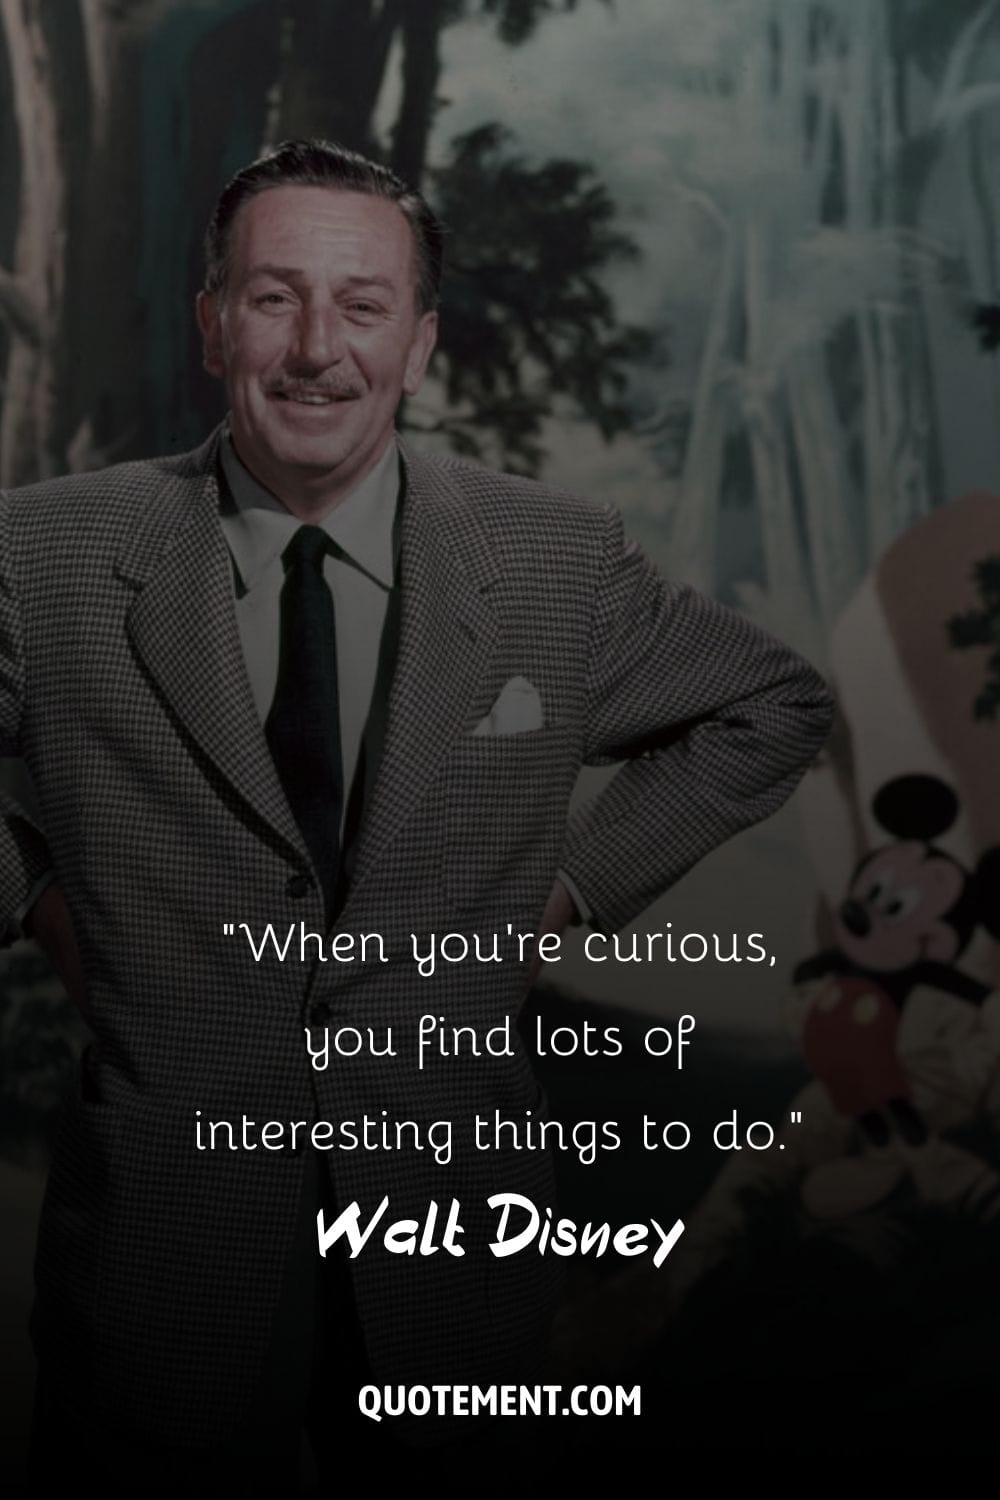 Walt Disney's joyful charisma captured in pose.